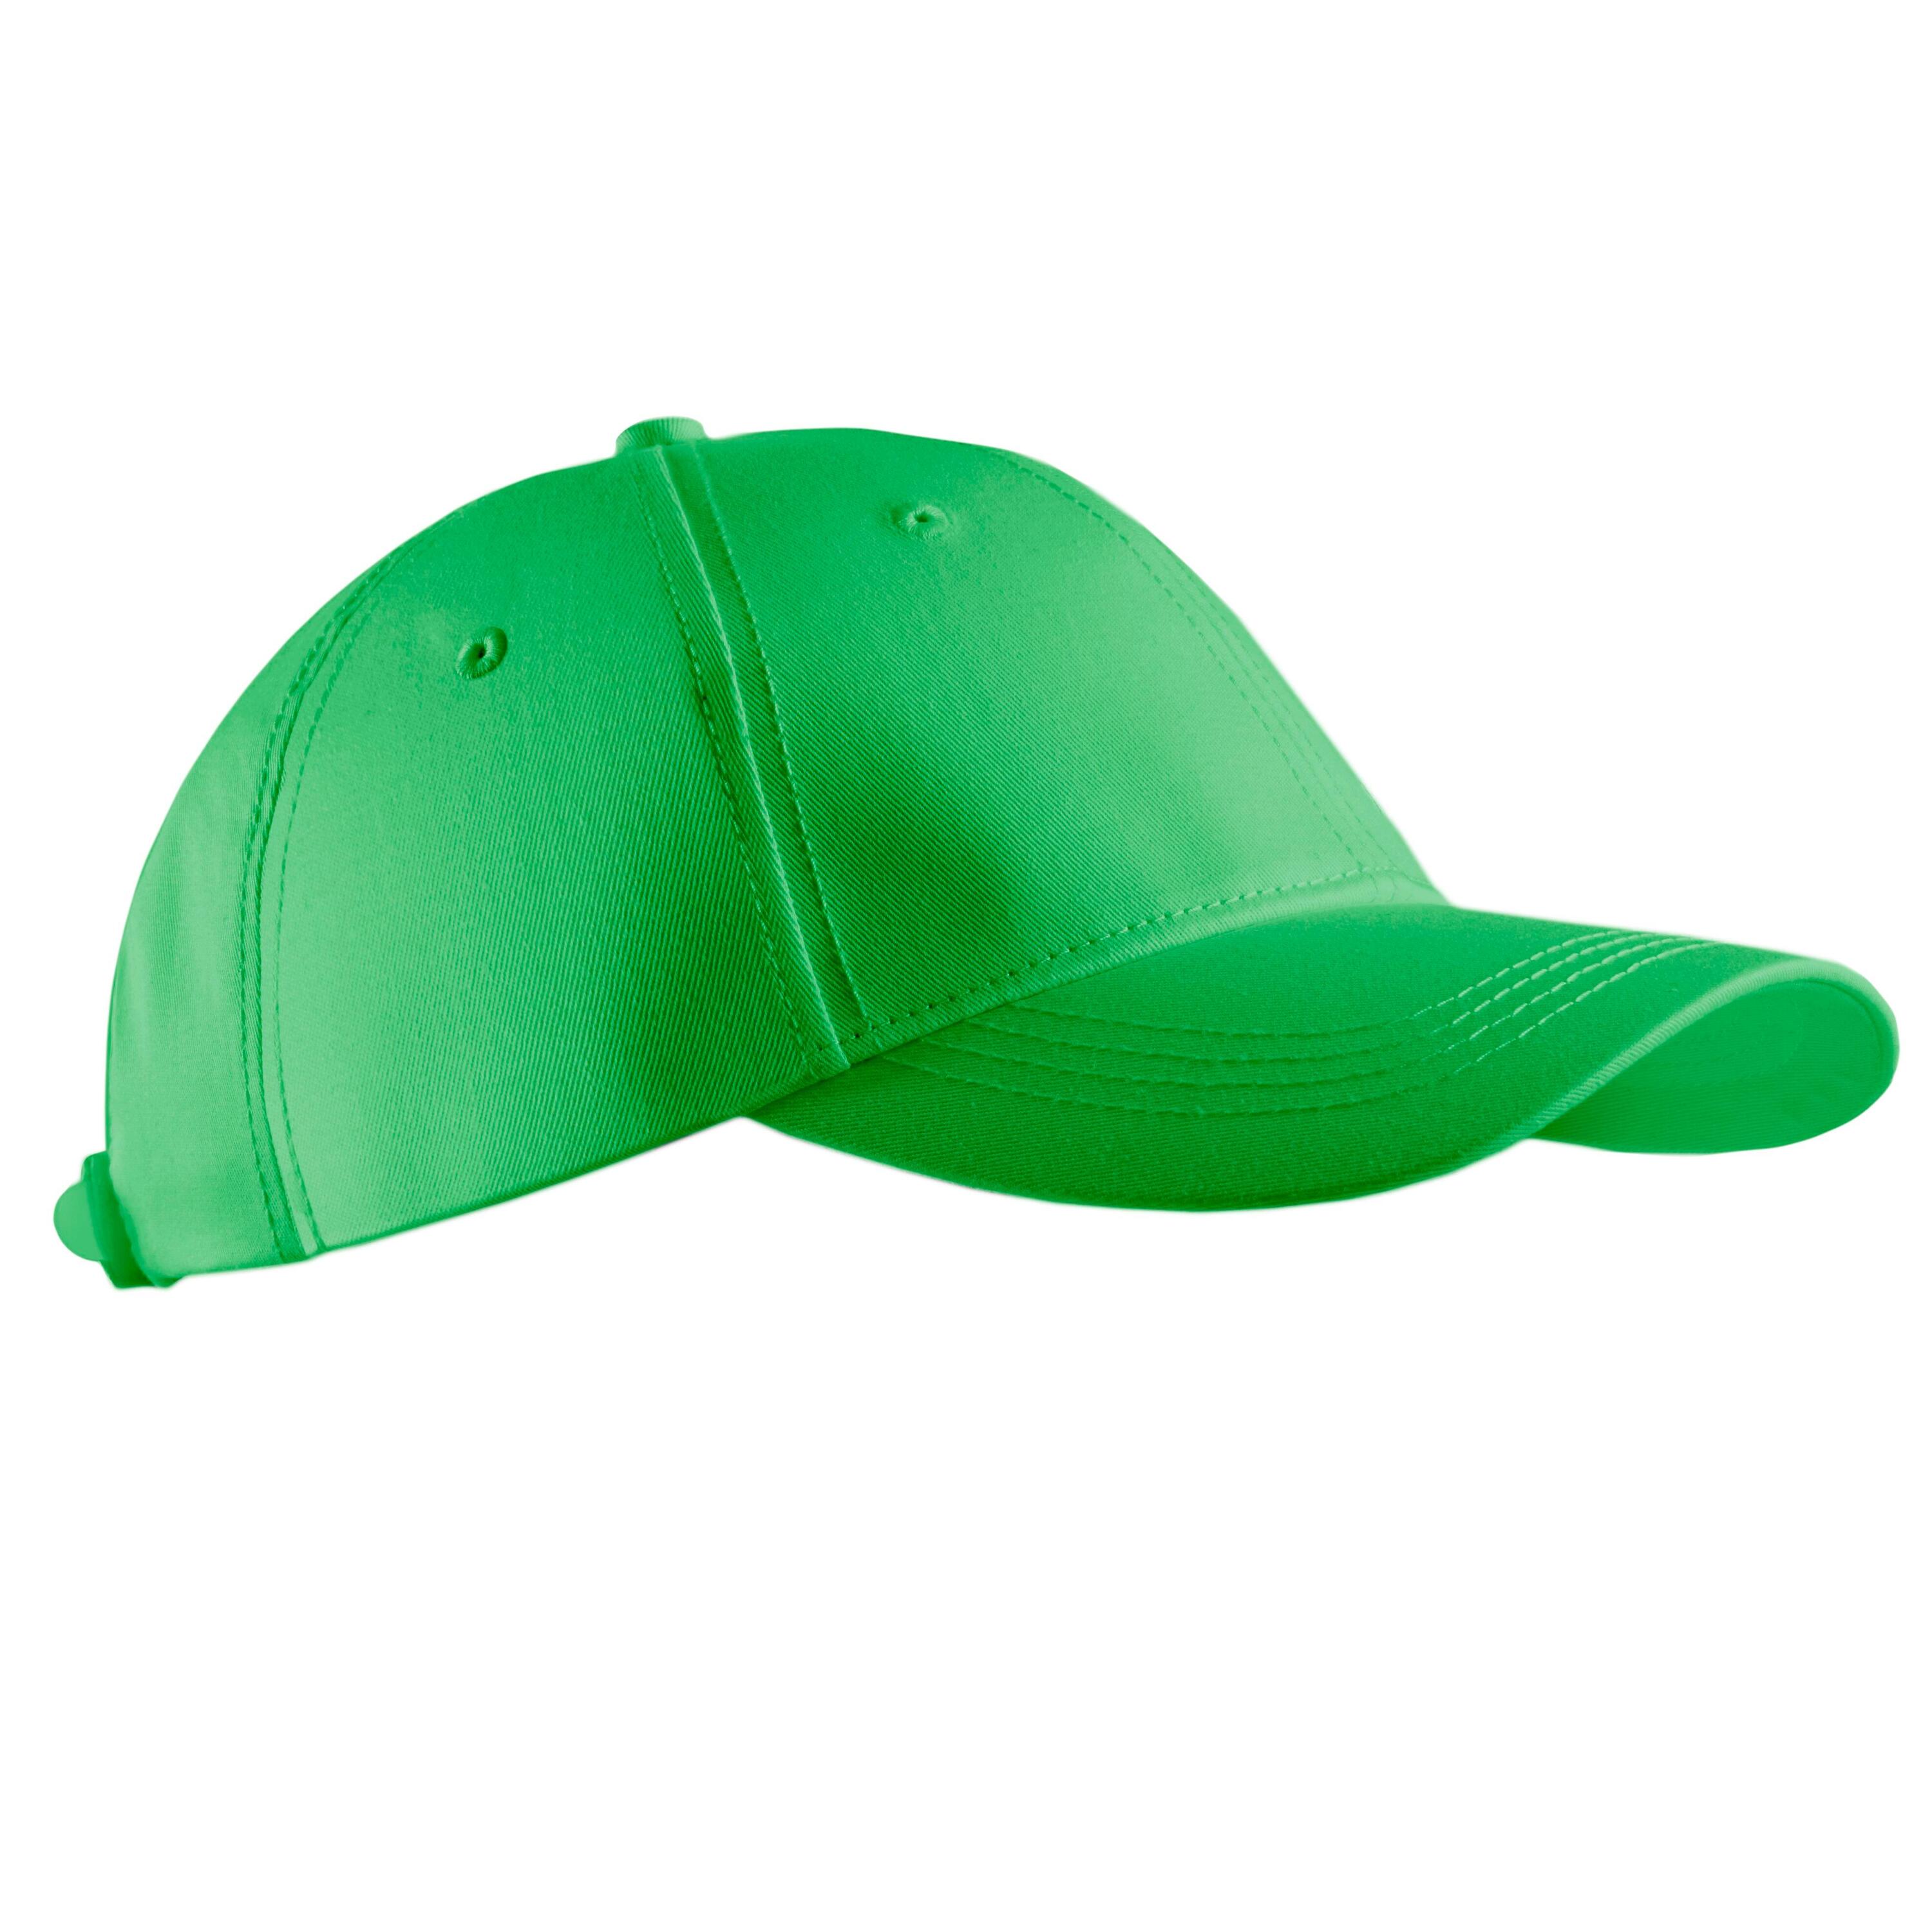 Adult's golf cap - MW 500 dark green 2/3